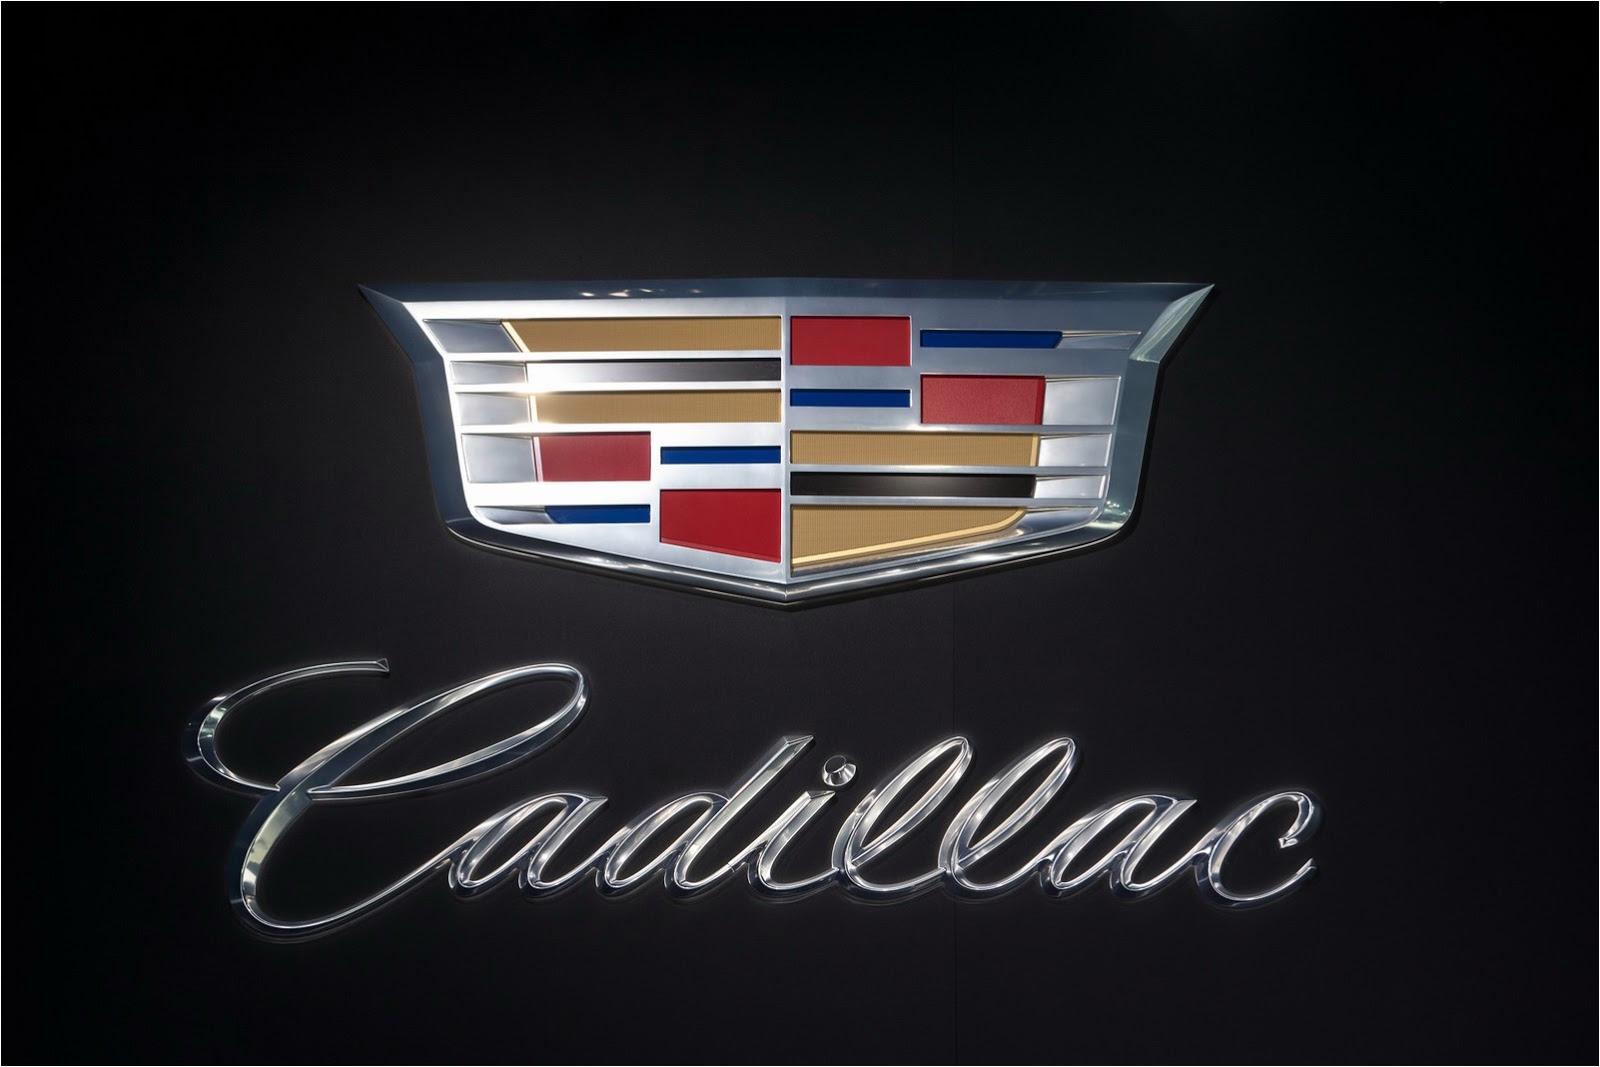 Black Cadillac Wallpapers Top Free Black Cadillac Backgrounds Wallpaperaccess